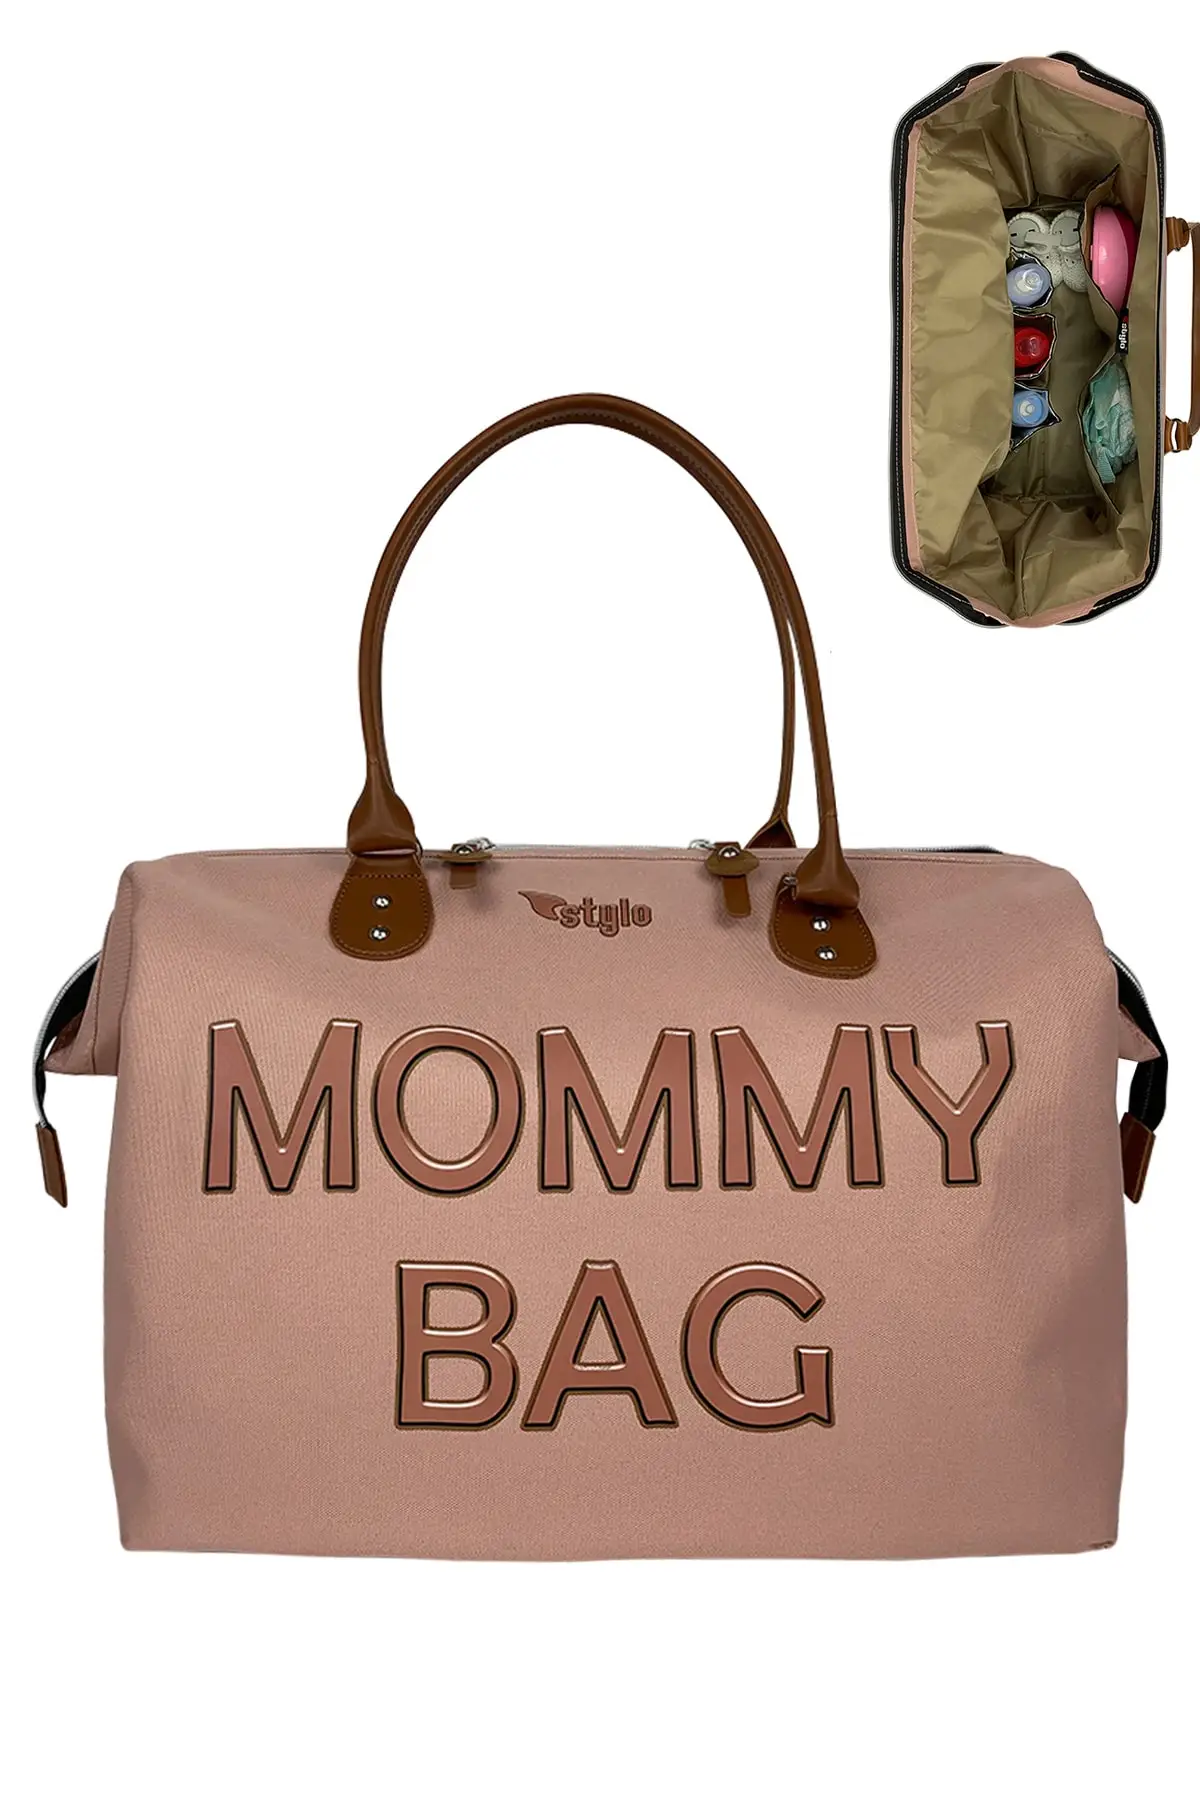 Mommy Bag Mother Handbag Insulated Pockets Waterproof Fabric Kids Baby Bag Child Backbag Tote Maternity Women's Dress Bag рюкзак